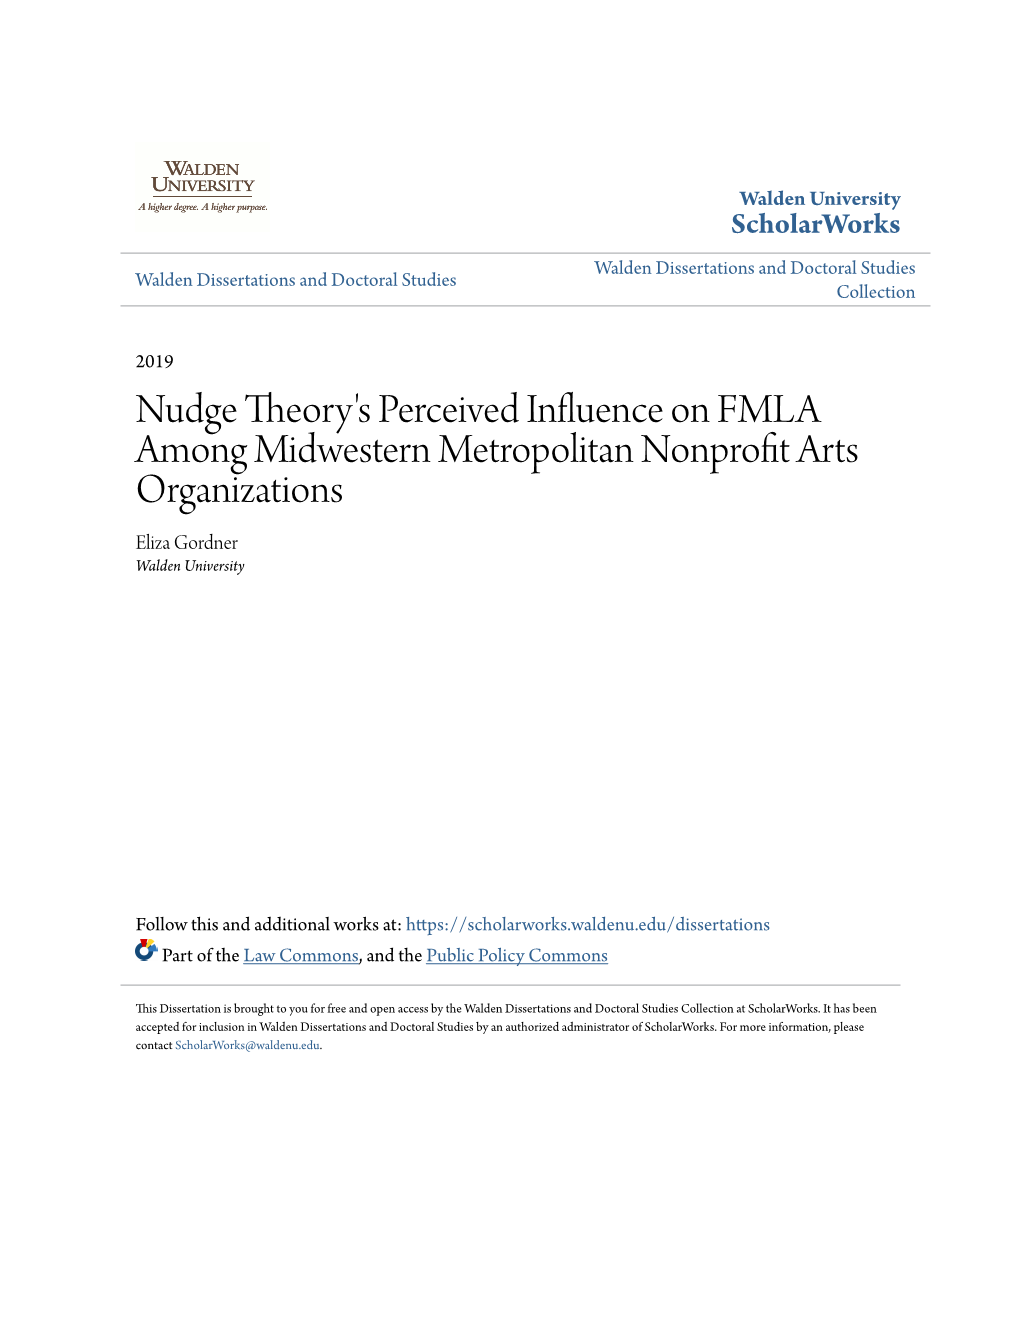 Nudge Theory's Perceived Influence on FMLA Among Midwestern Metropolitan Nonprofit Arts Organizations Eliza Gordner Walden University